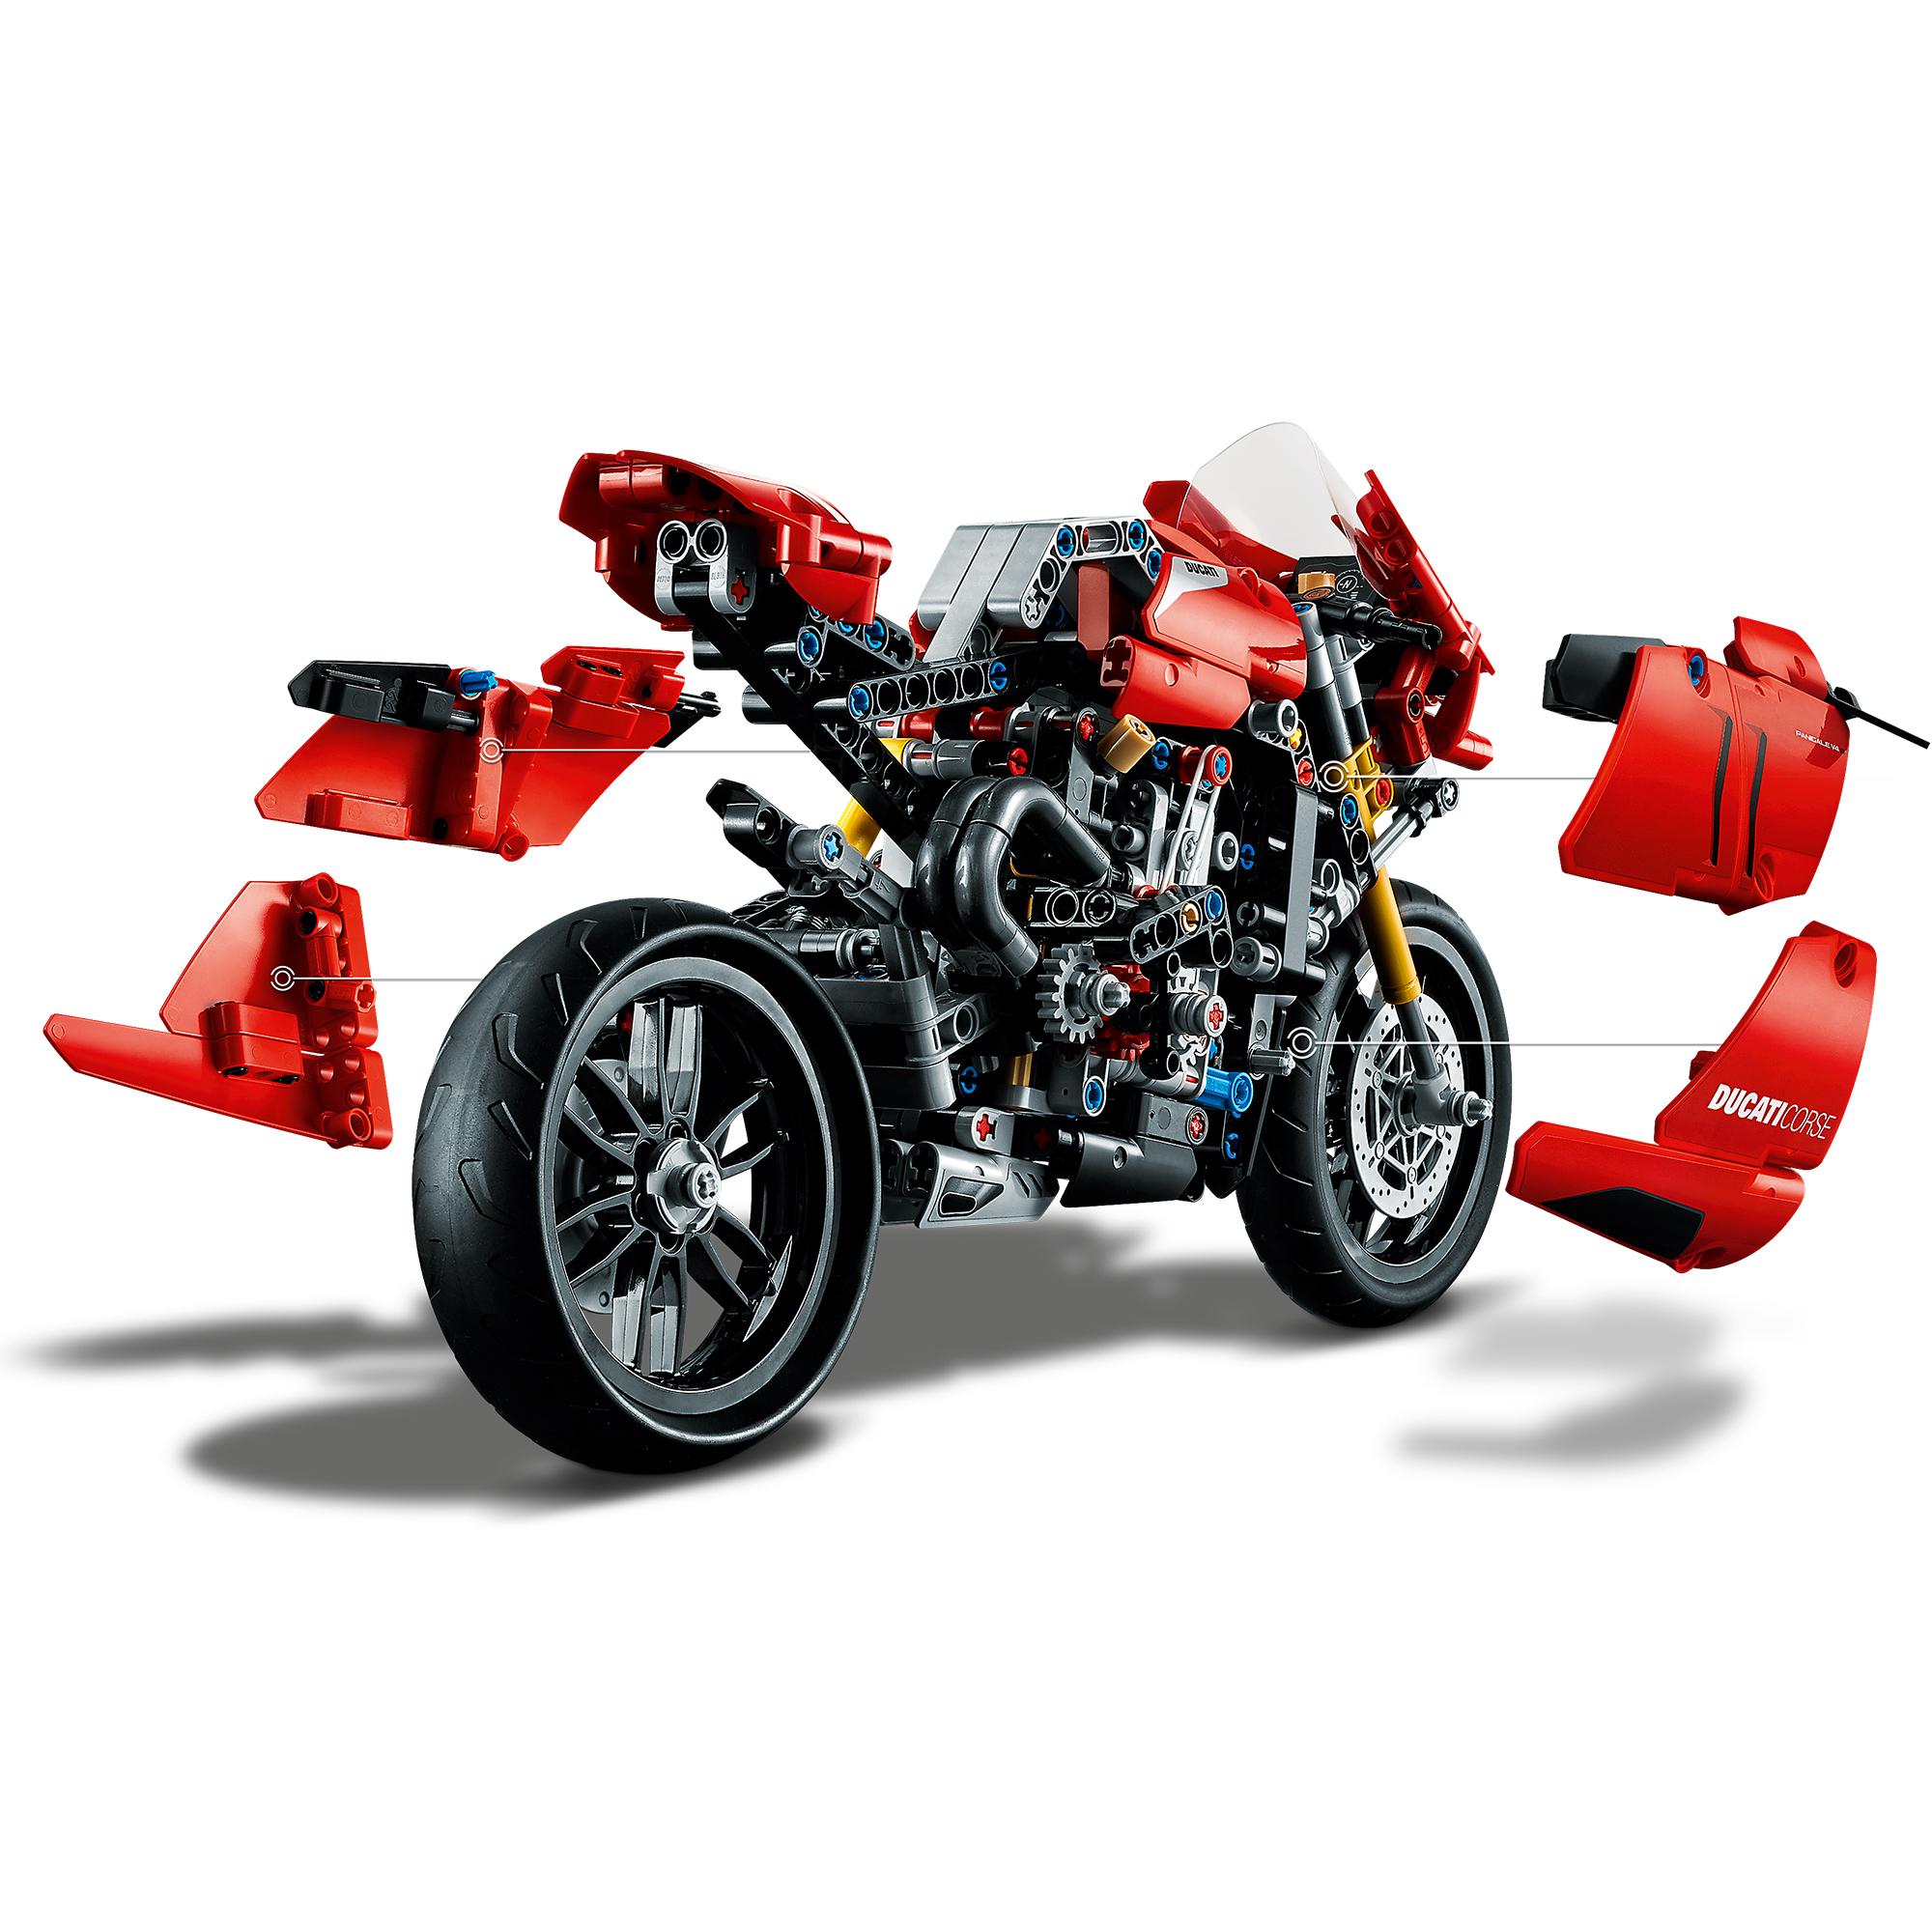 Lego technic ducati panigale v4 r - 42107 - LEGO TECHNIC, Lego